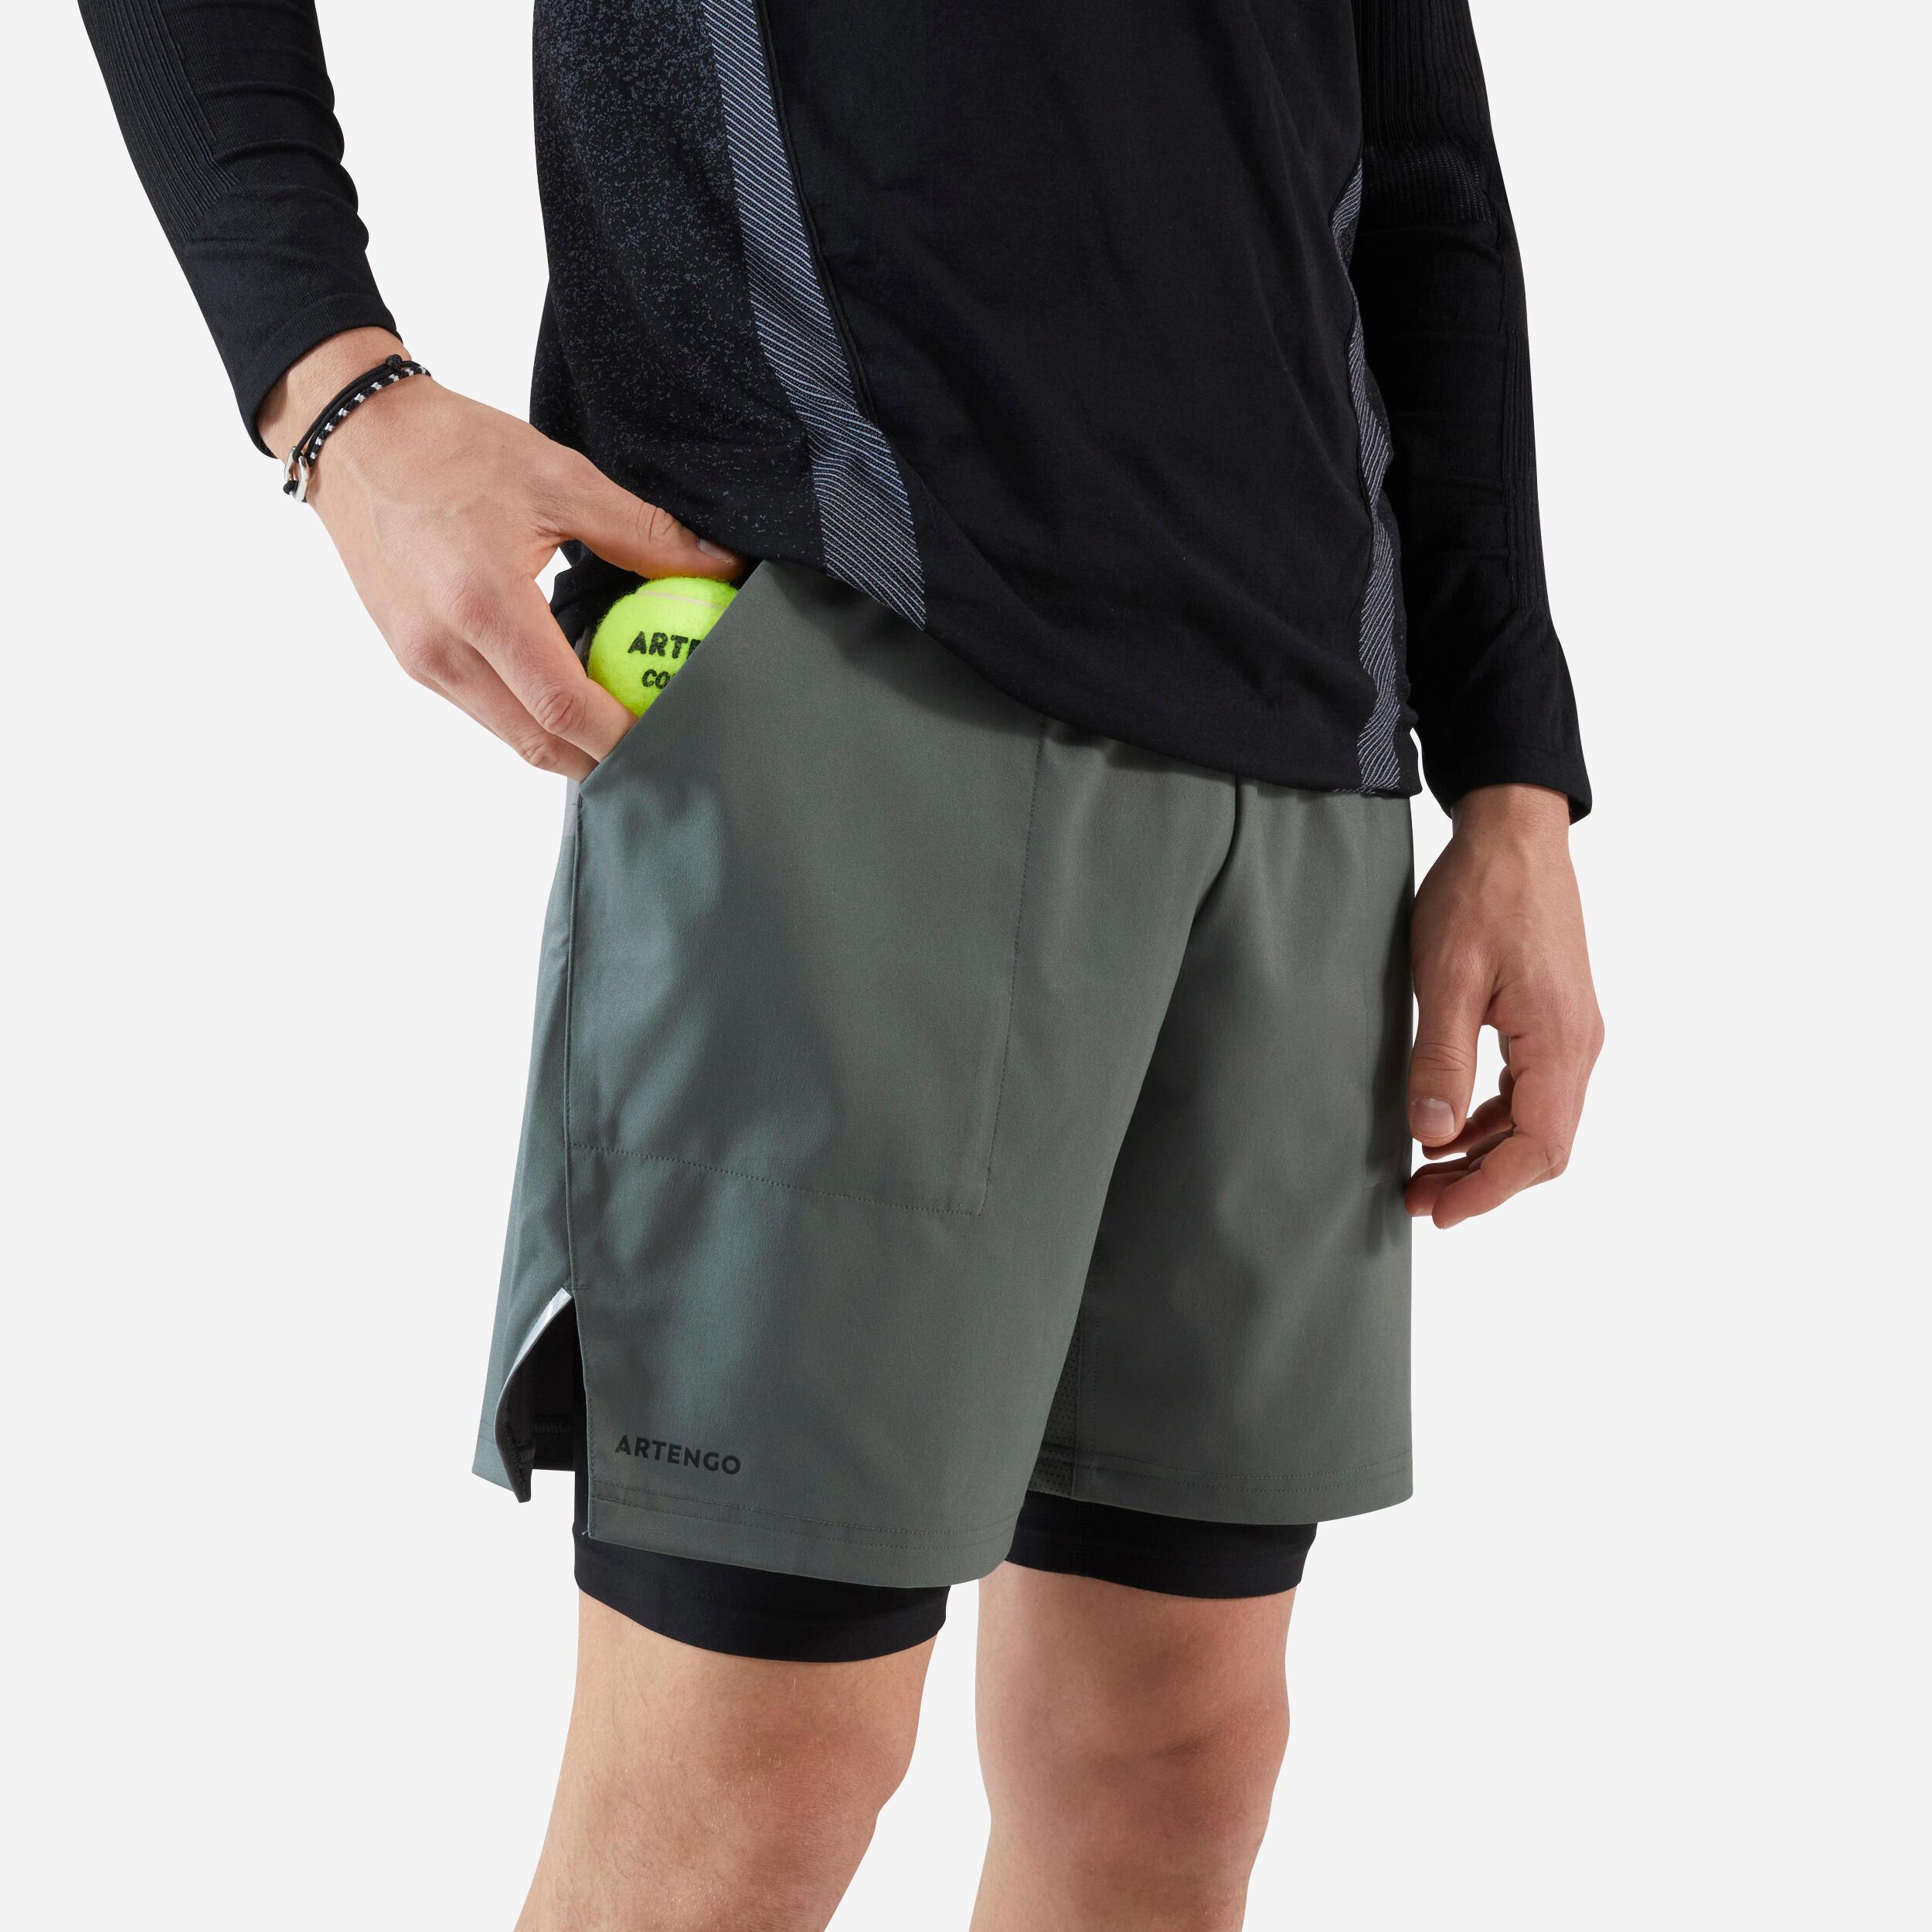 ARTENGO Men's Tennis 2-in-1 Shorts and Undershorts Thermic - Grey/Khaki/Black